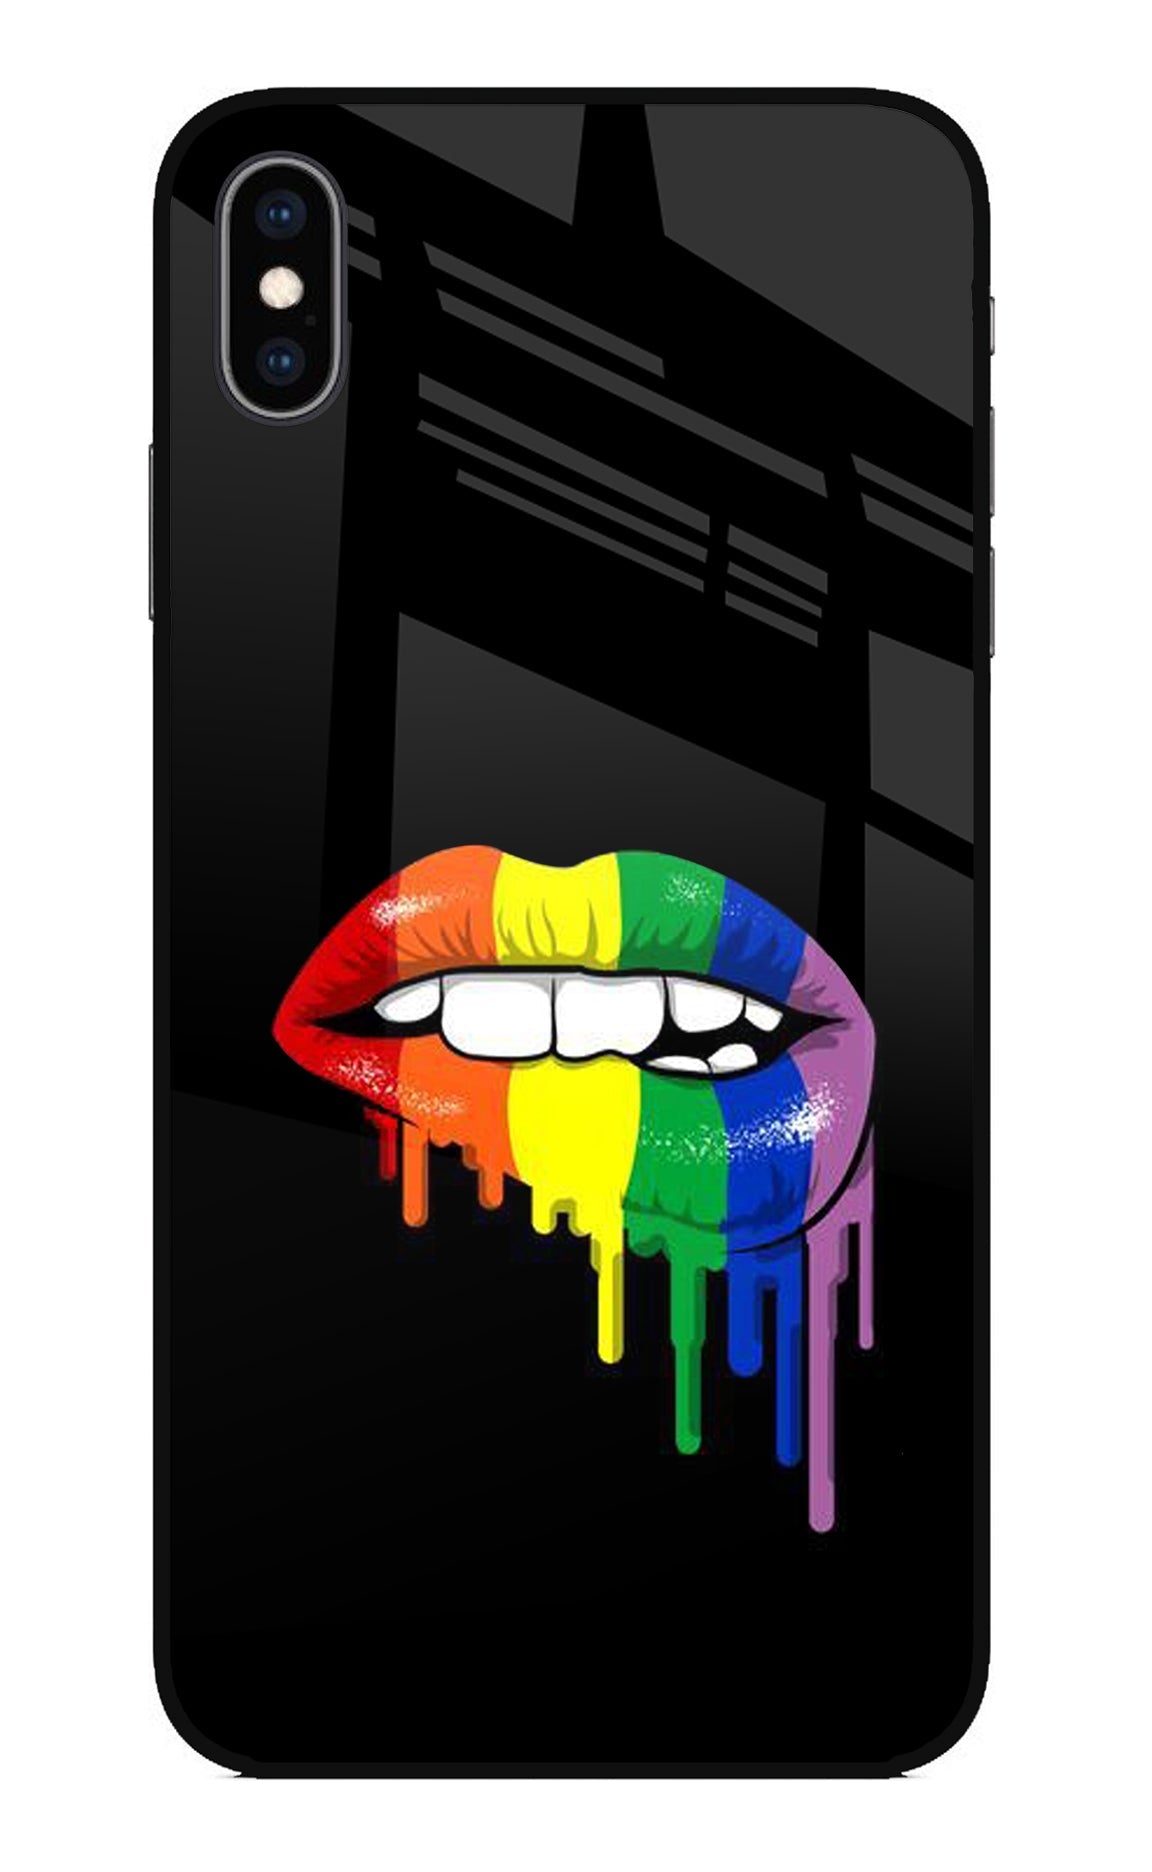 Lips Biting iPhone XS Max Glass Case